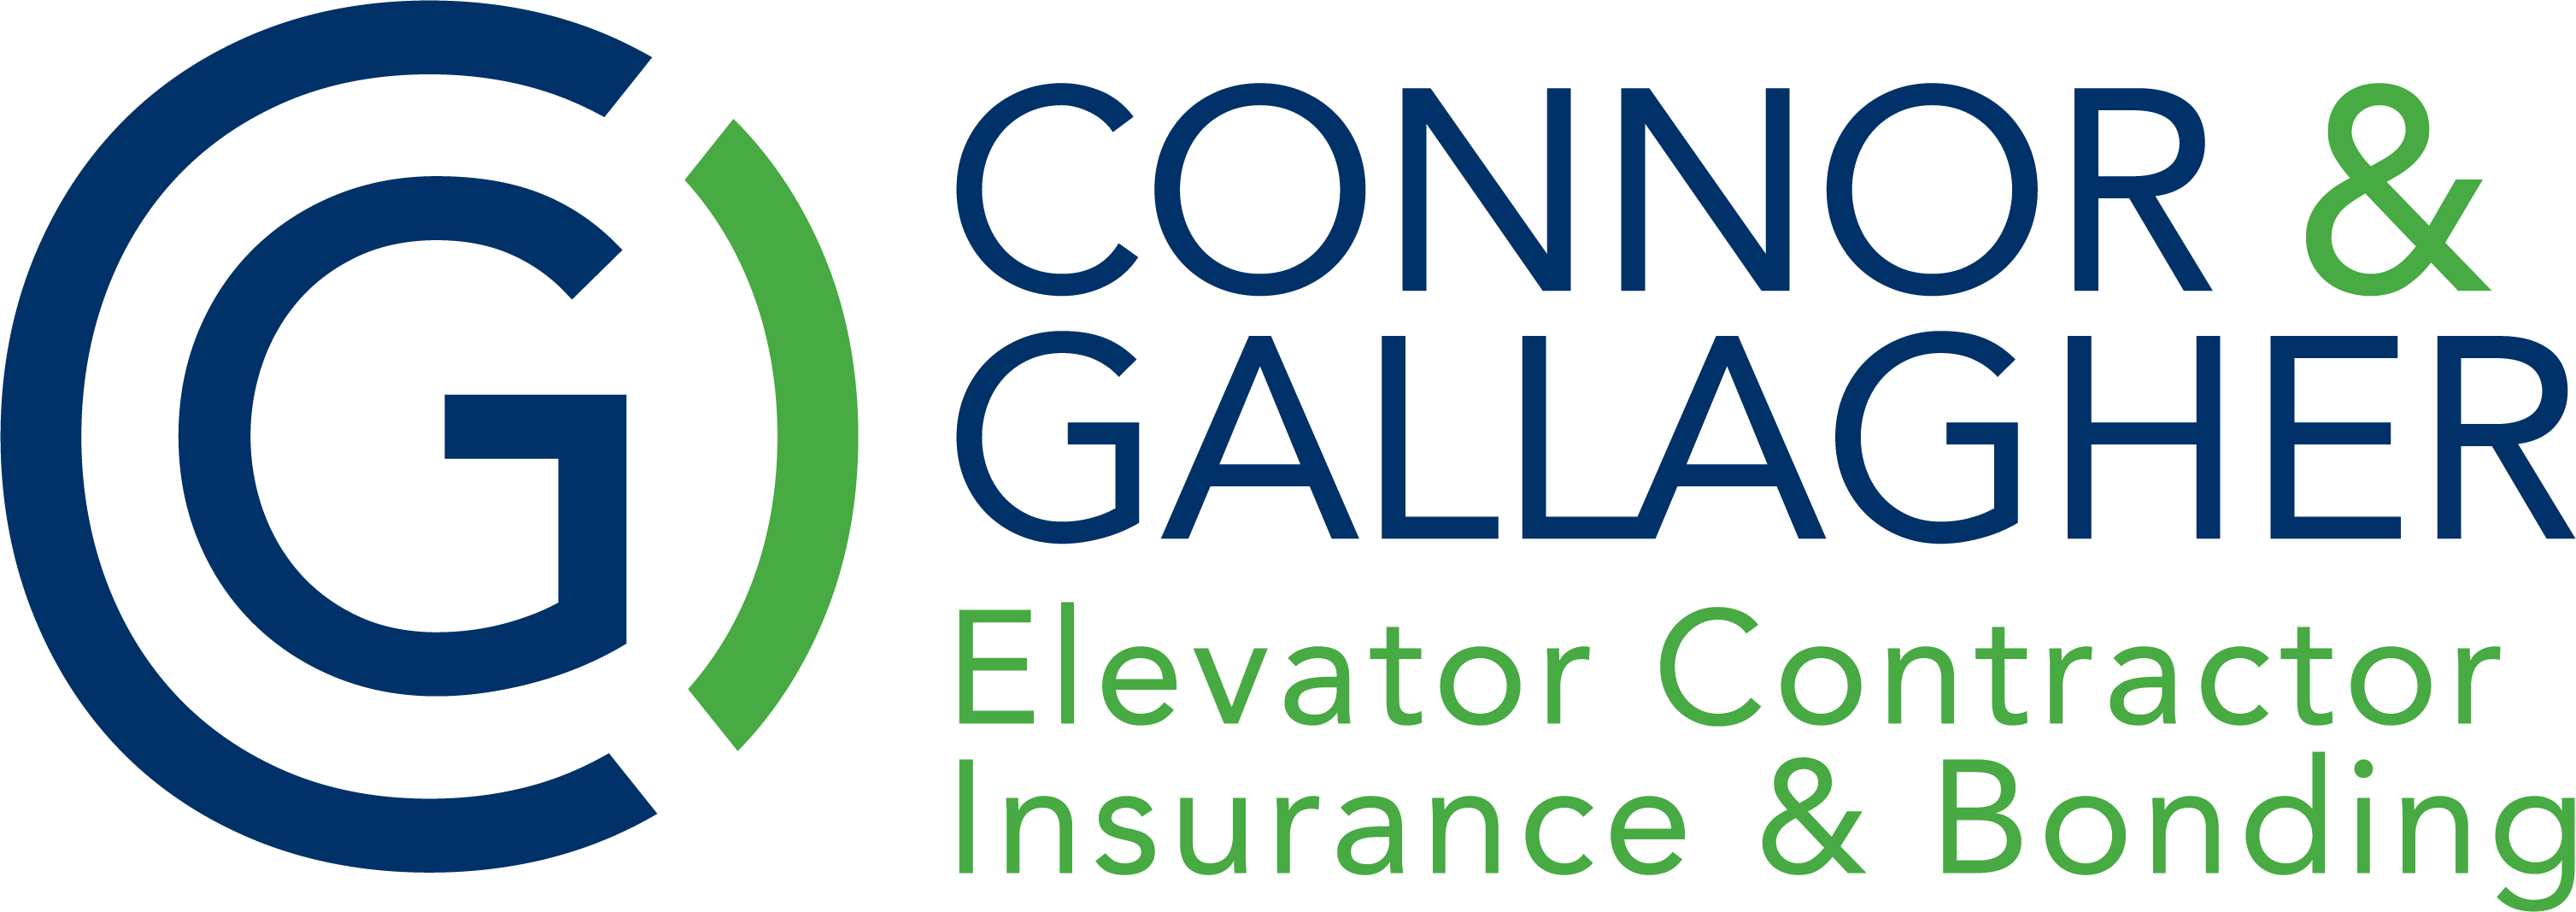 CGO logo ElevatorContract final 24x01578